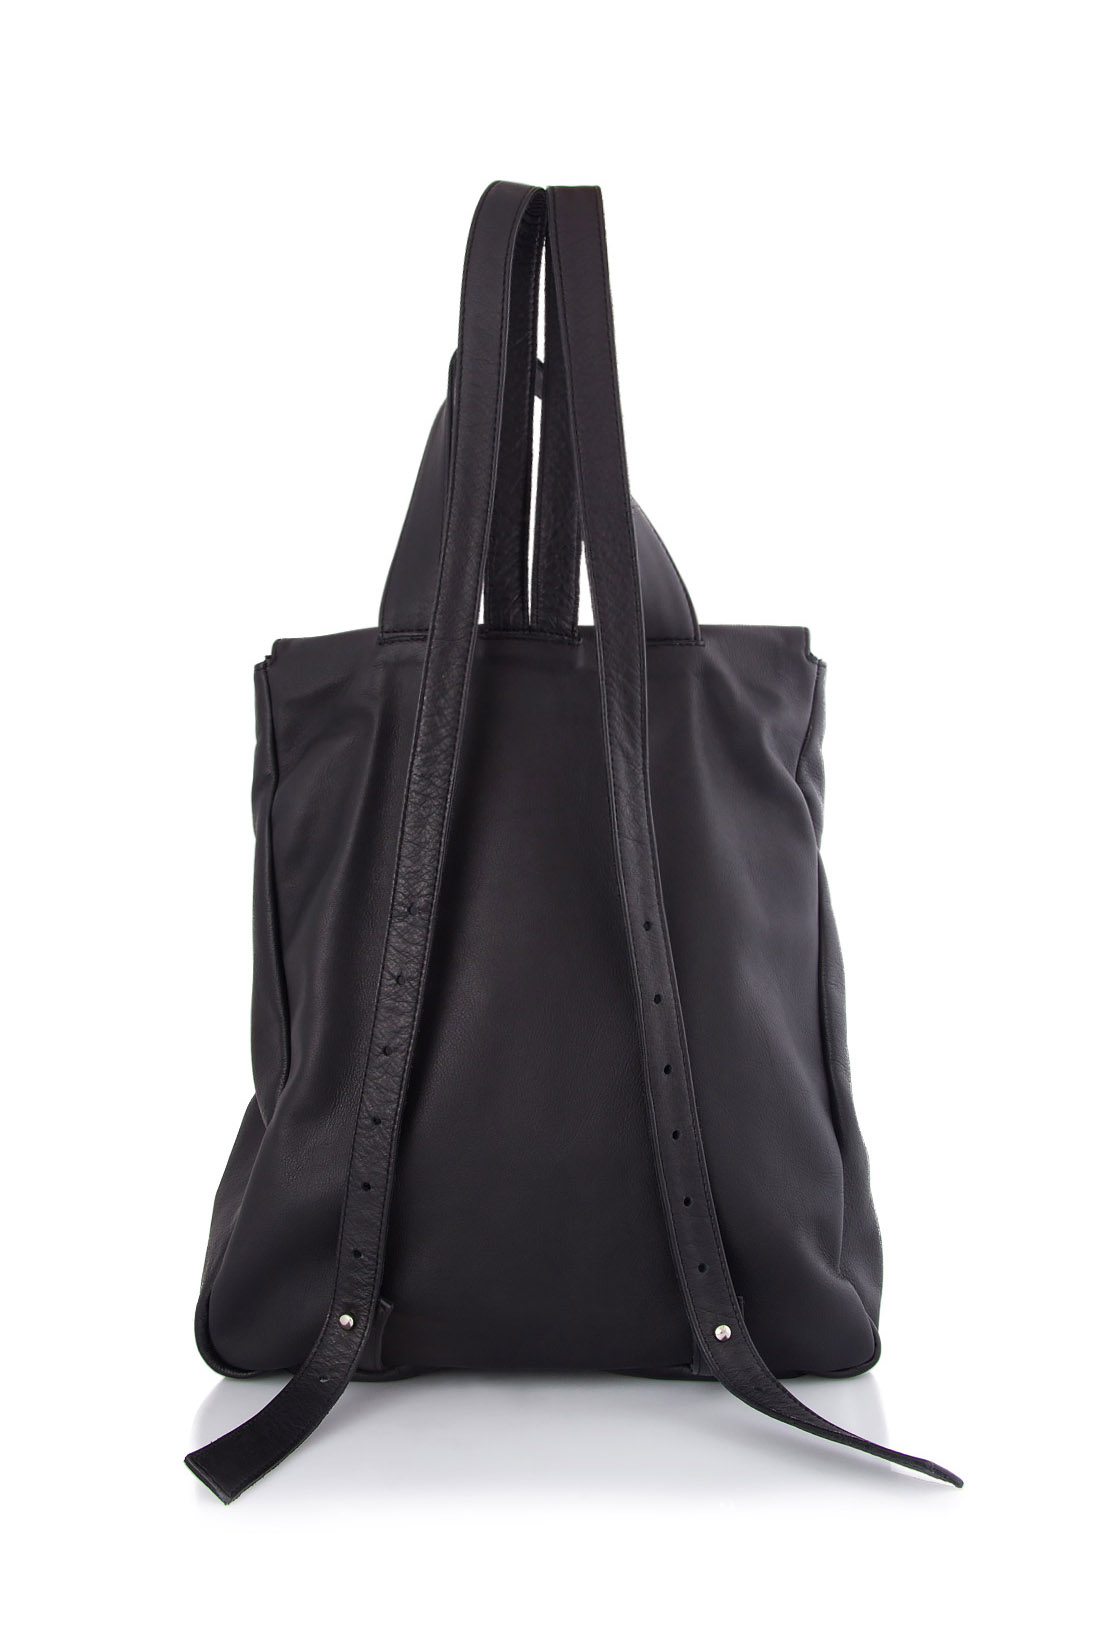 Black leather backpack Mihaela Glavan  image 2